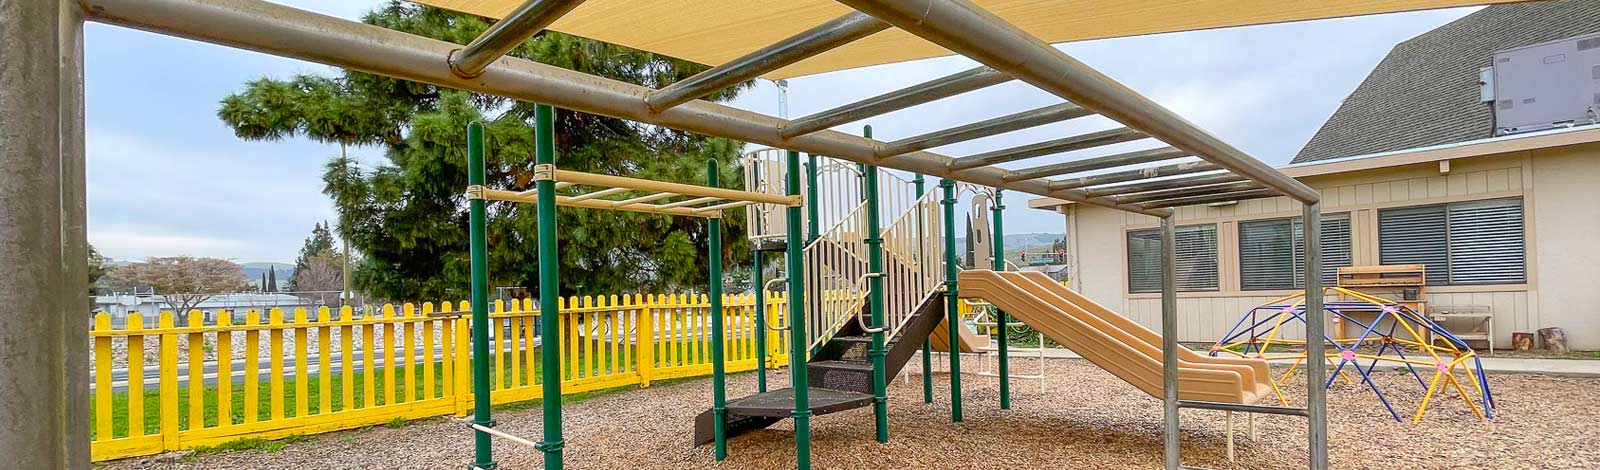 Little Tree Playschool – San Jose Day Care – After School Education